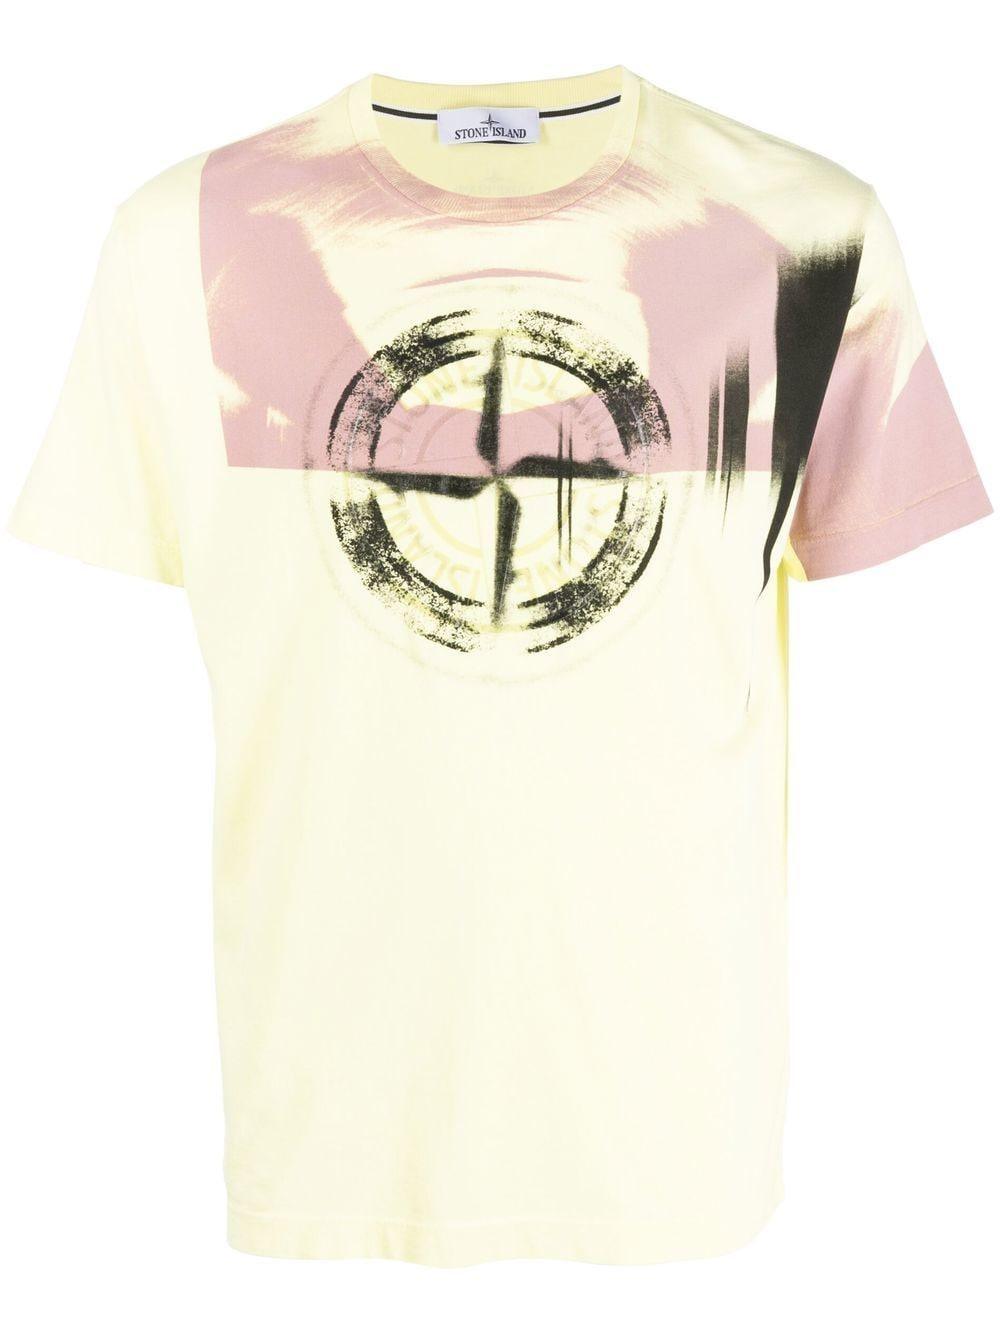 Stone Island Compass Logo T Shirt Yellow - Urban Menswear